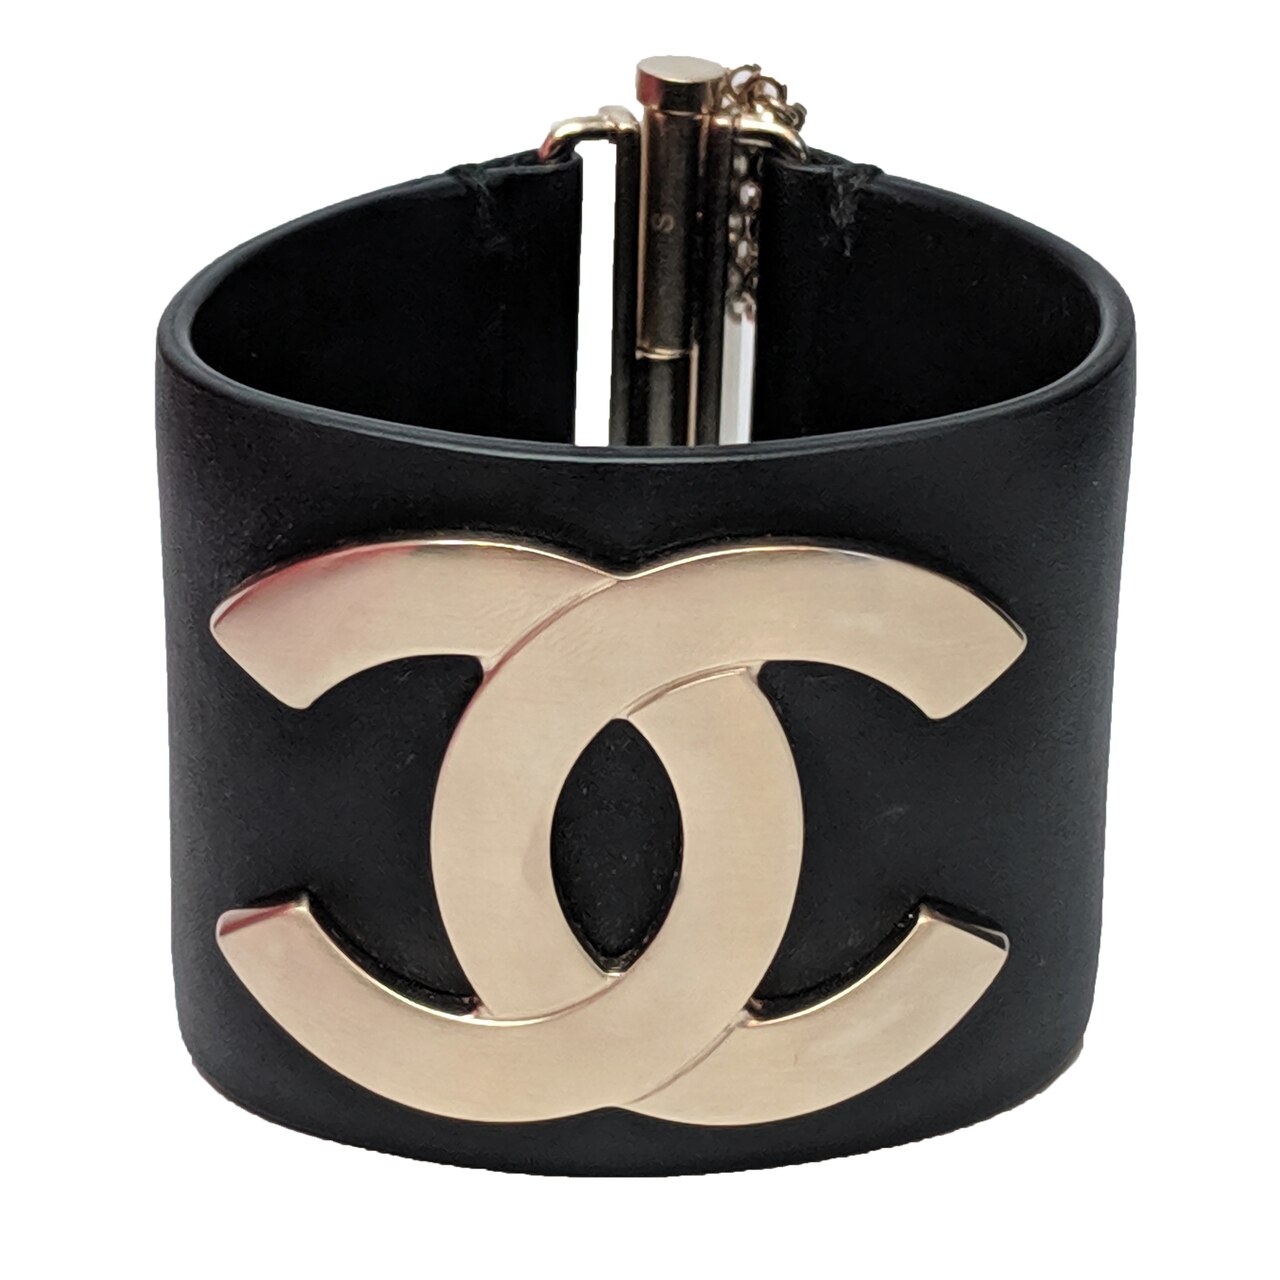 CHANEL Black Leather Cuff Bracelet Bangle Gold HW CC Turnlock Wider 21S  2021 | eBay